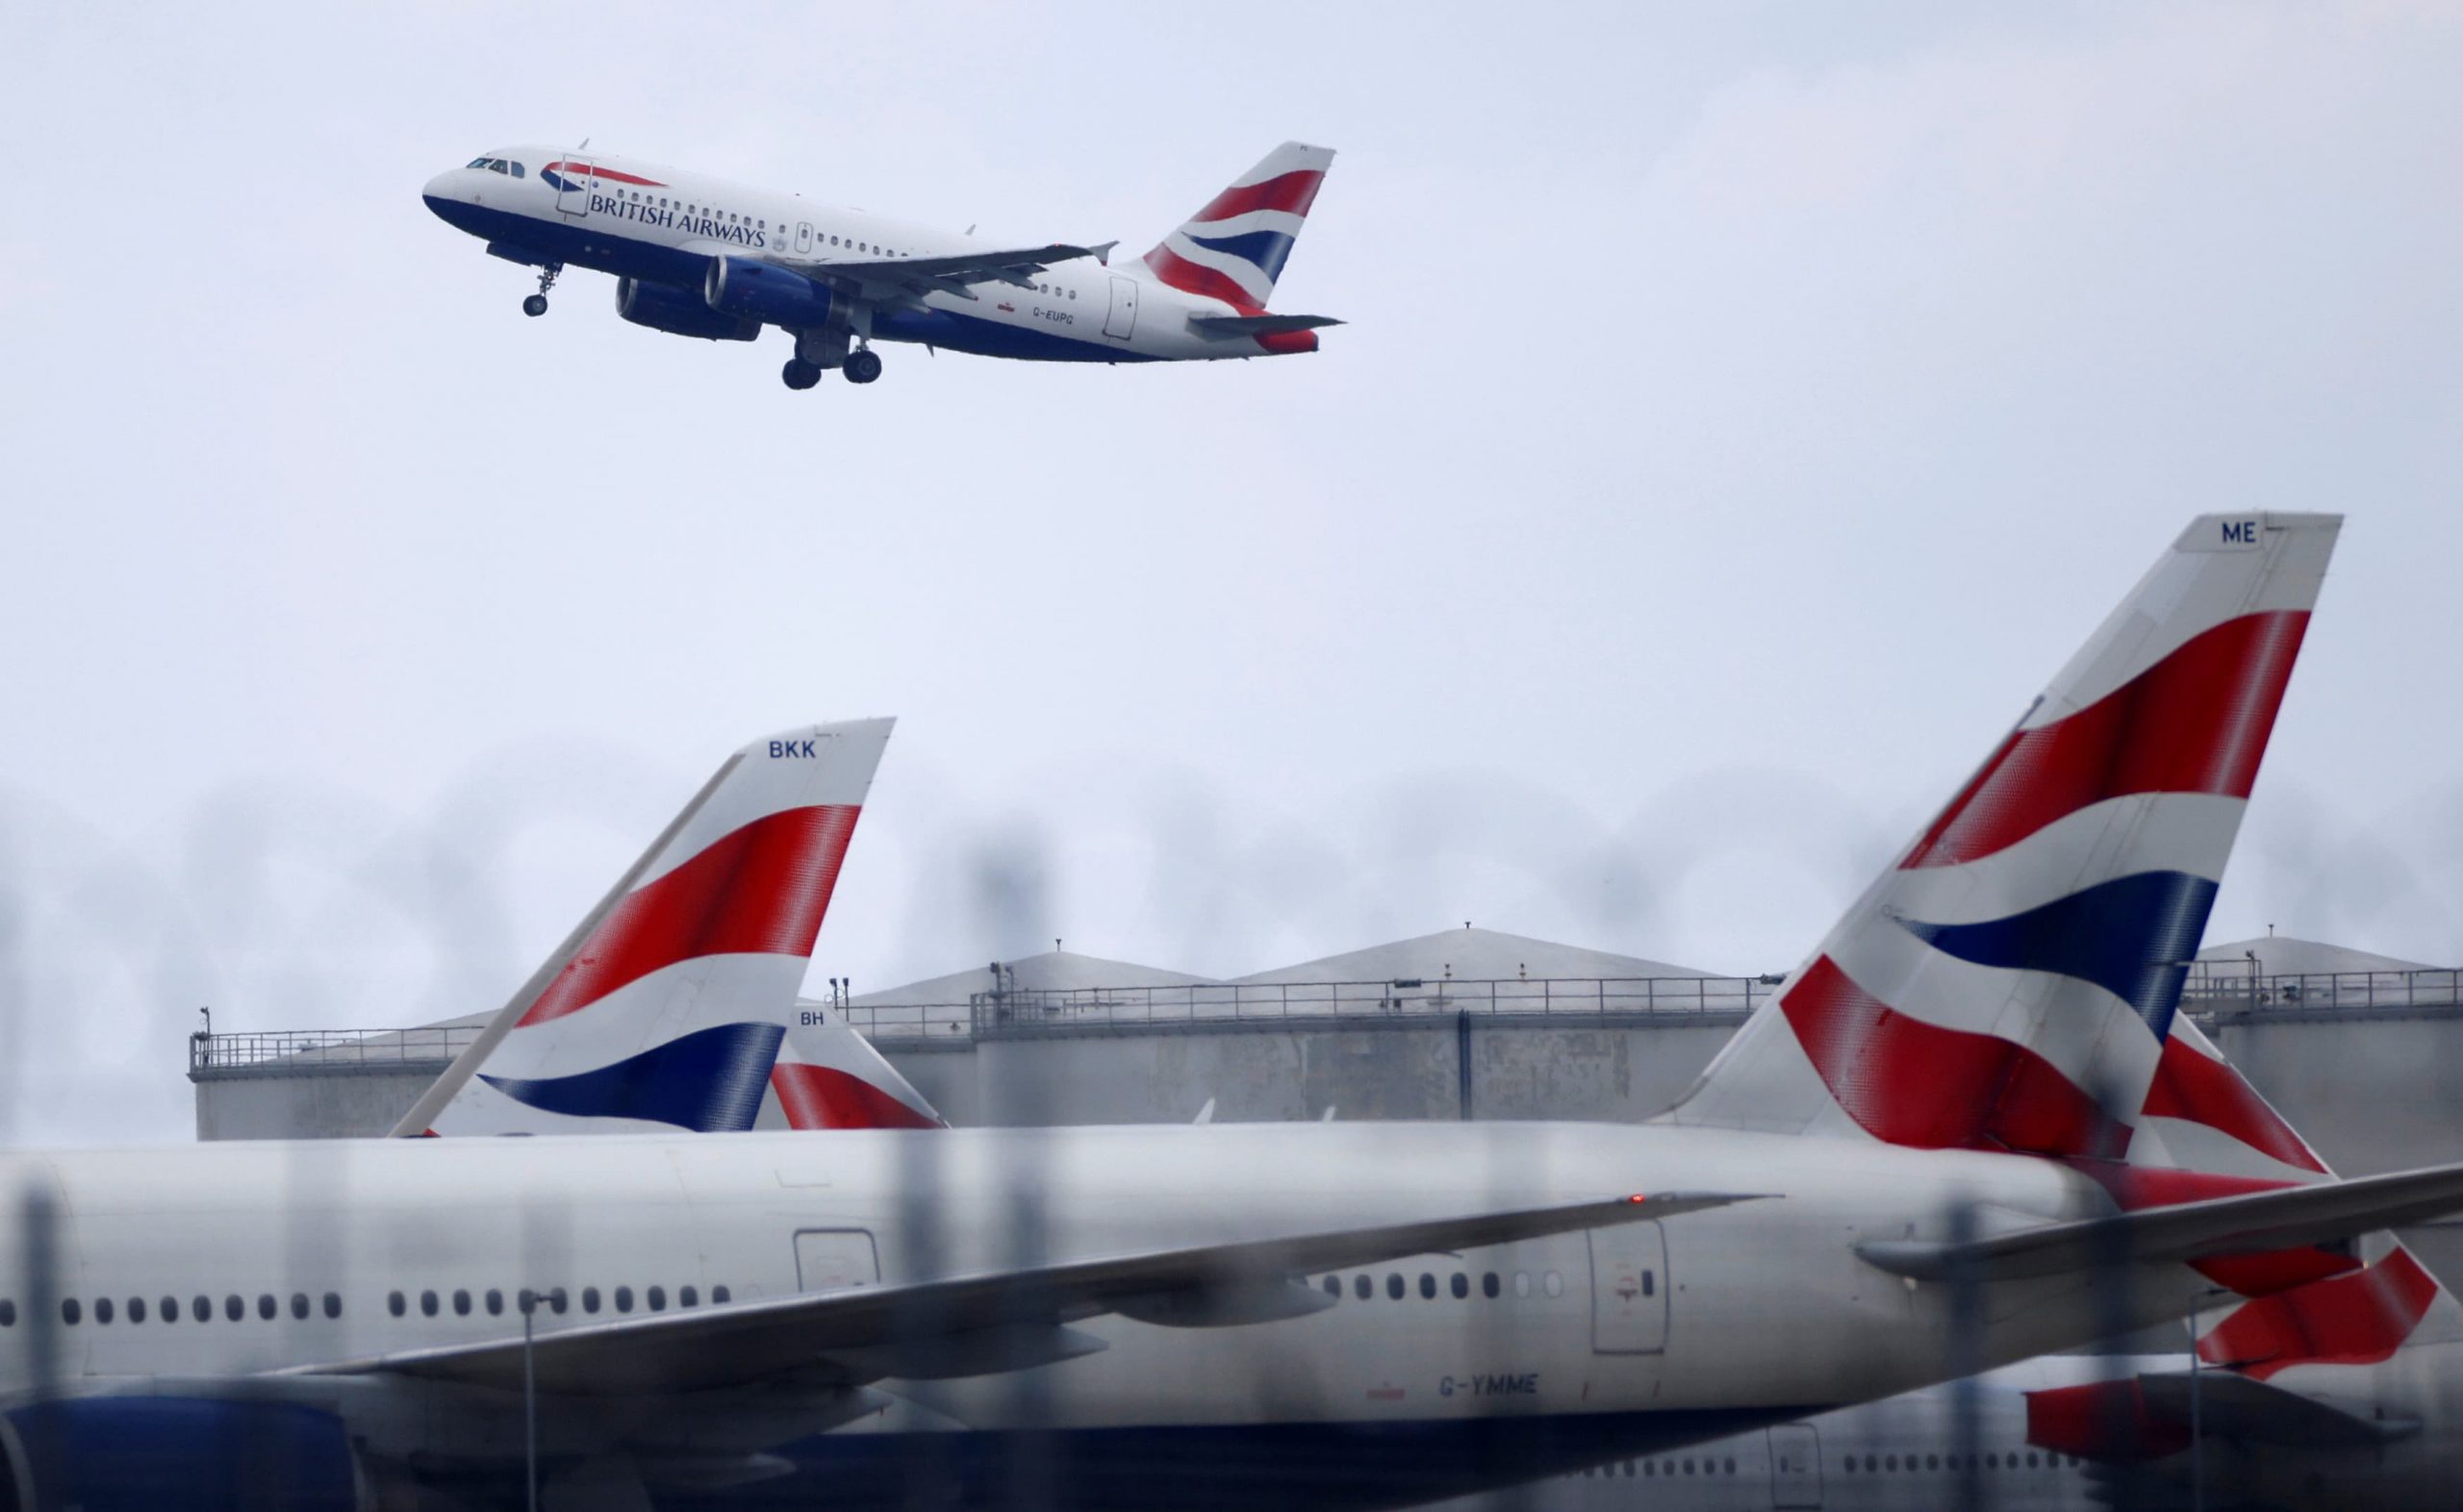 London’s Heathrow Airport cancelled flights for Queen Elizabeth II’s funeral